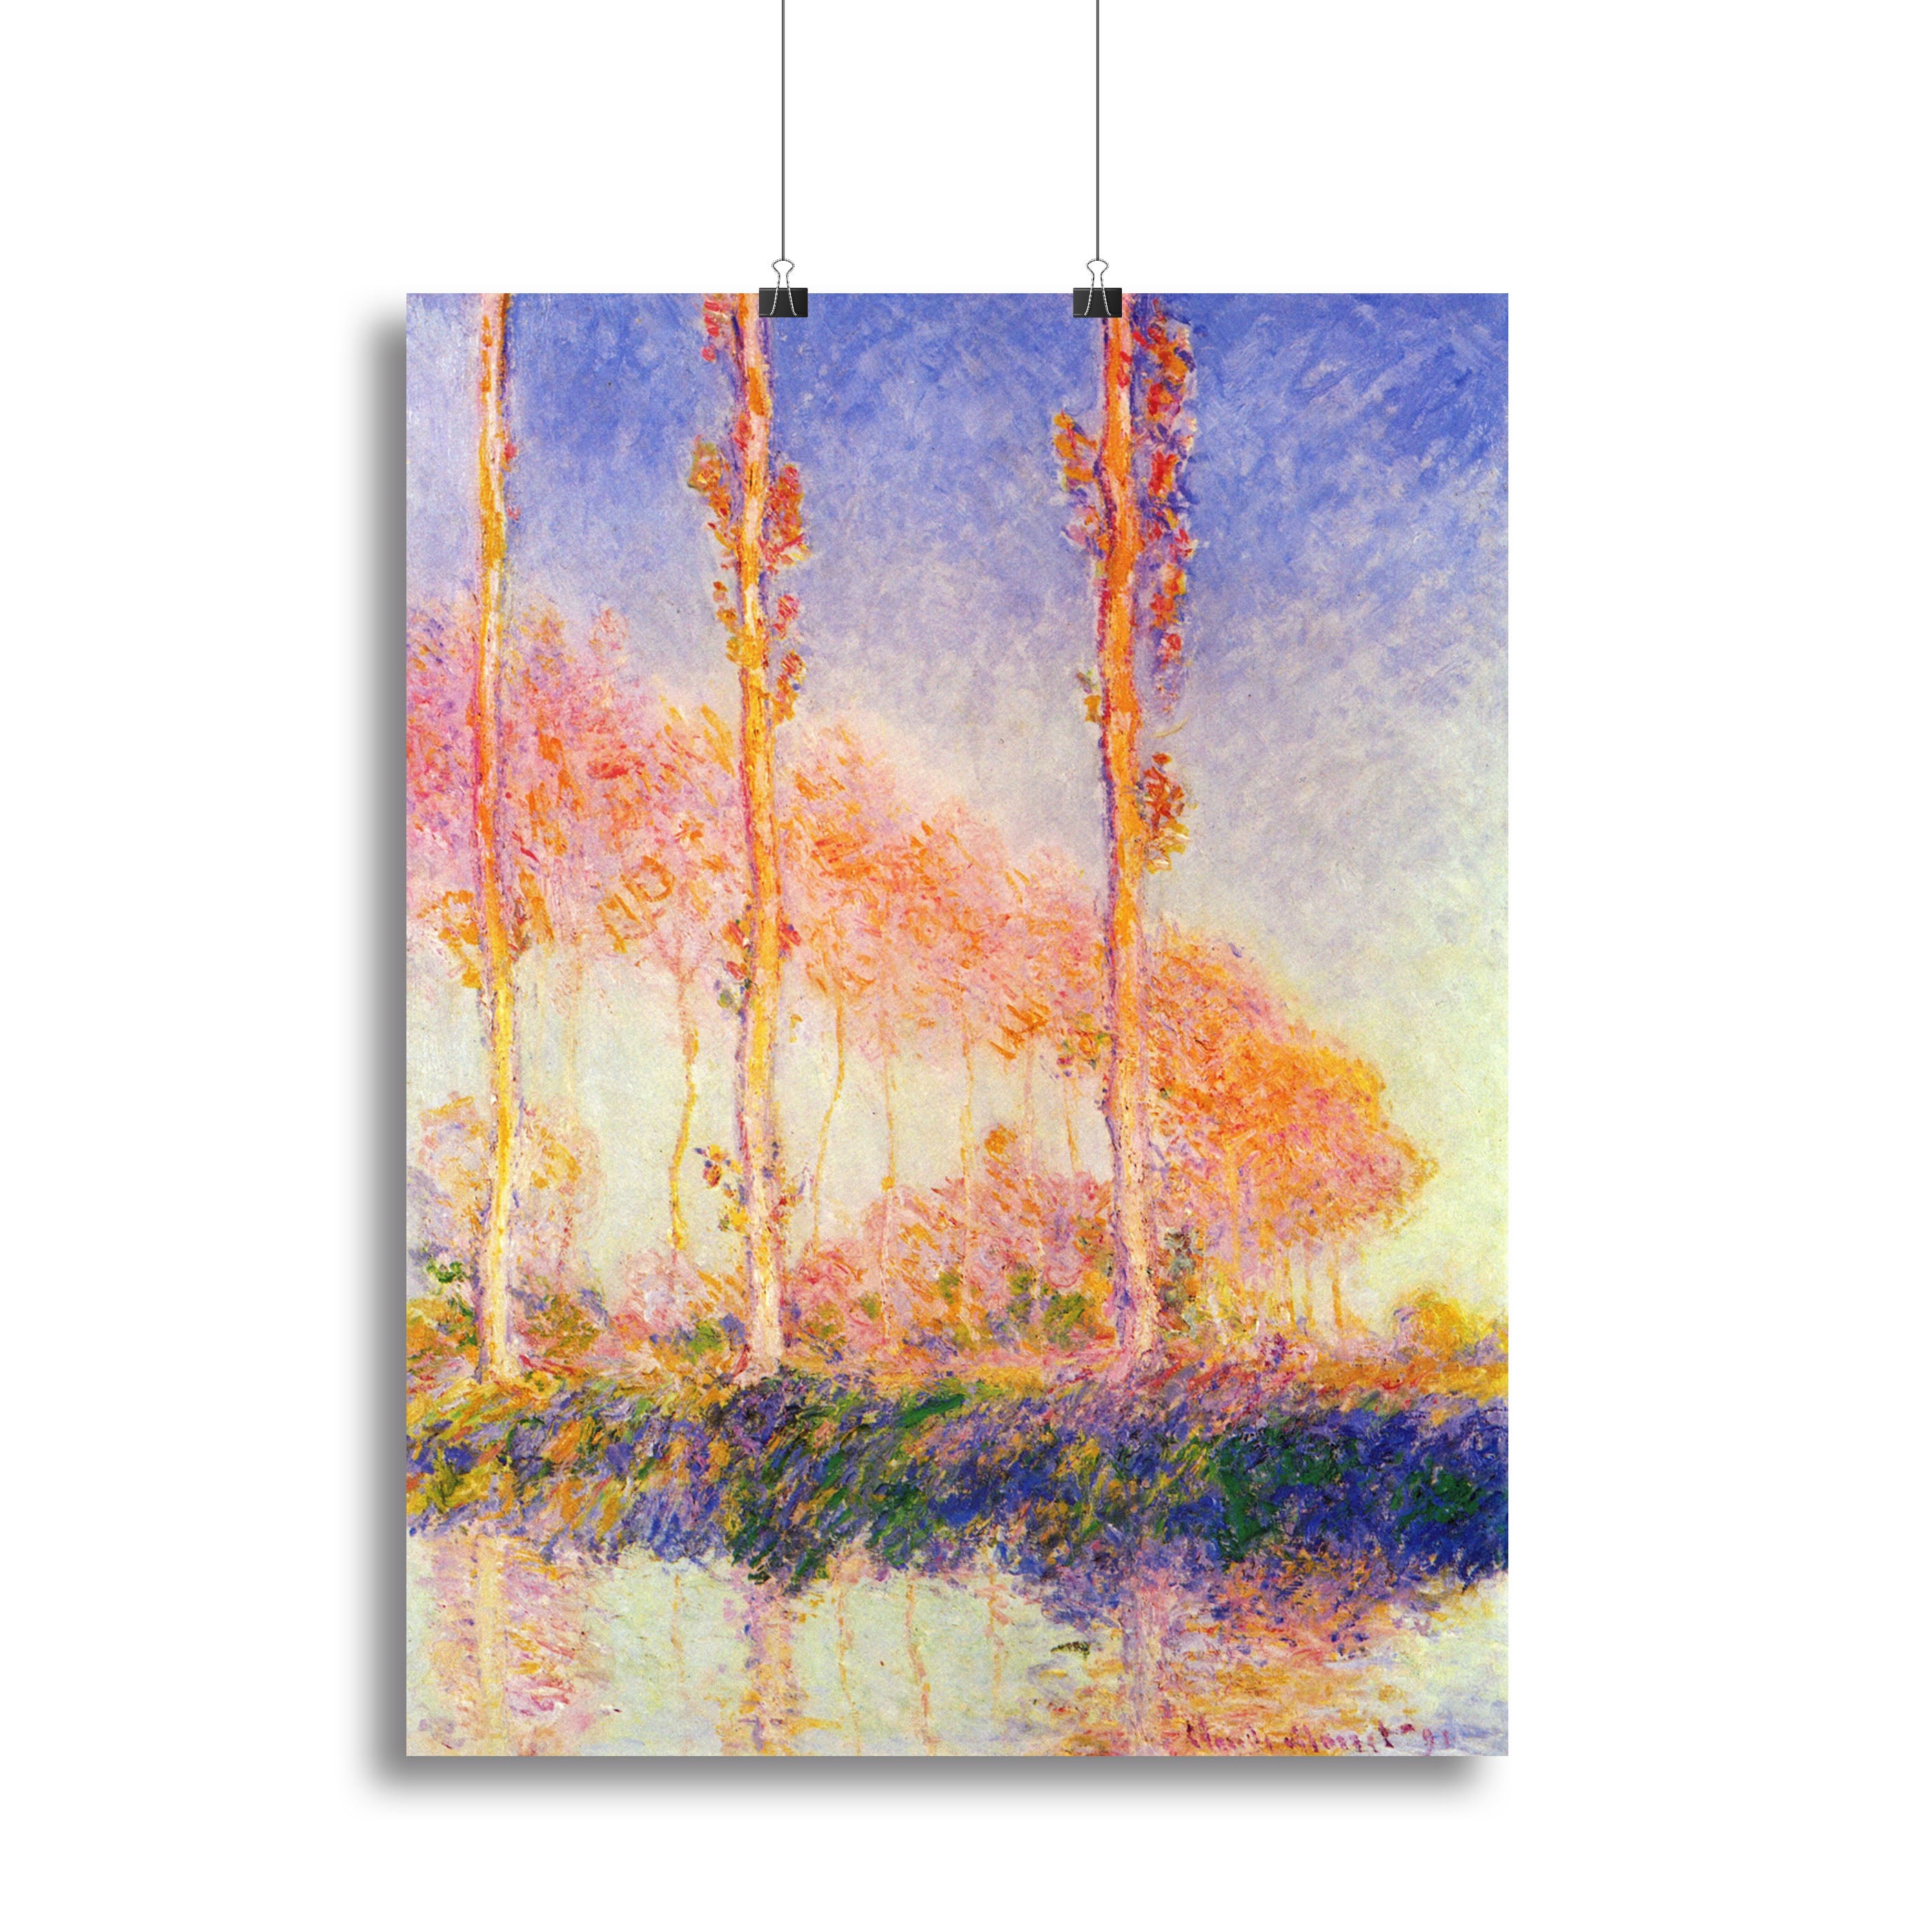 Poplars 2 by Monet Canvas Print or Poster - Canvas Art Rocks - 2